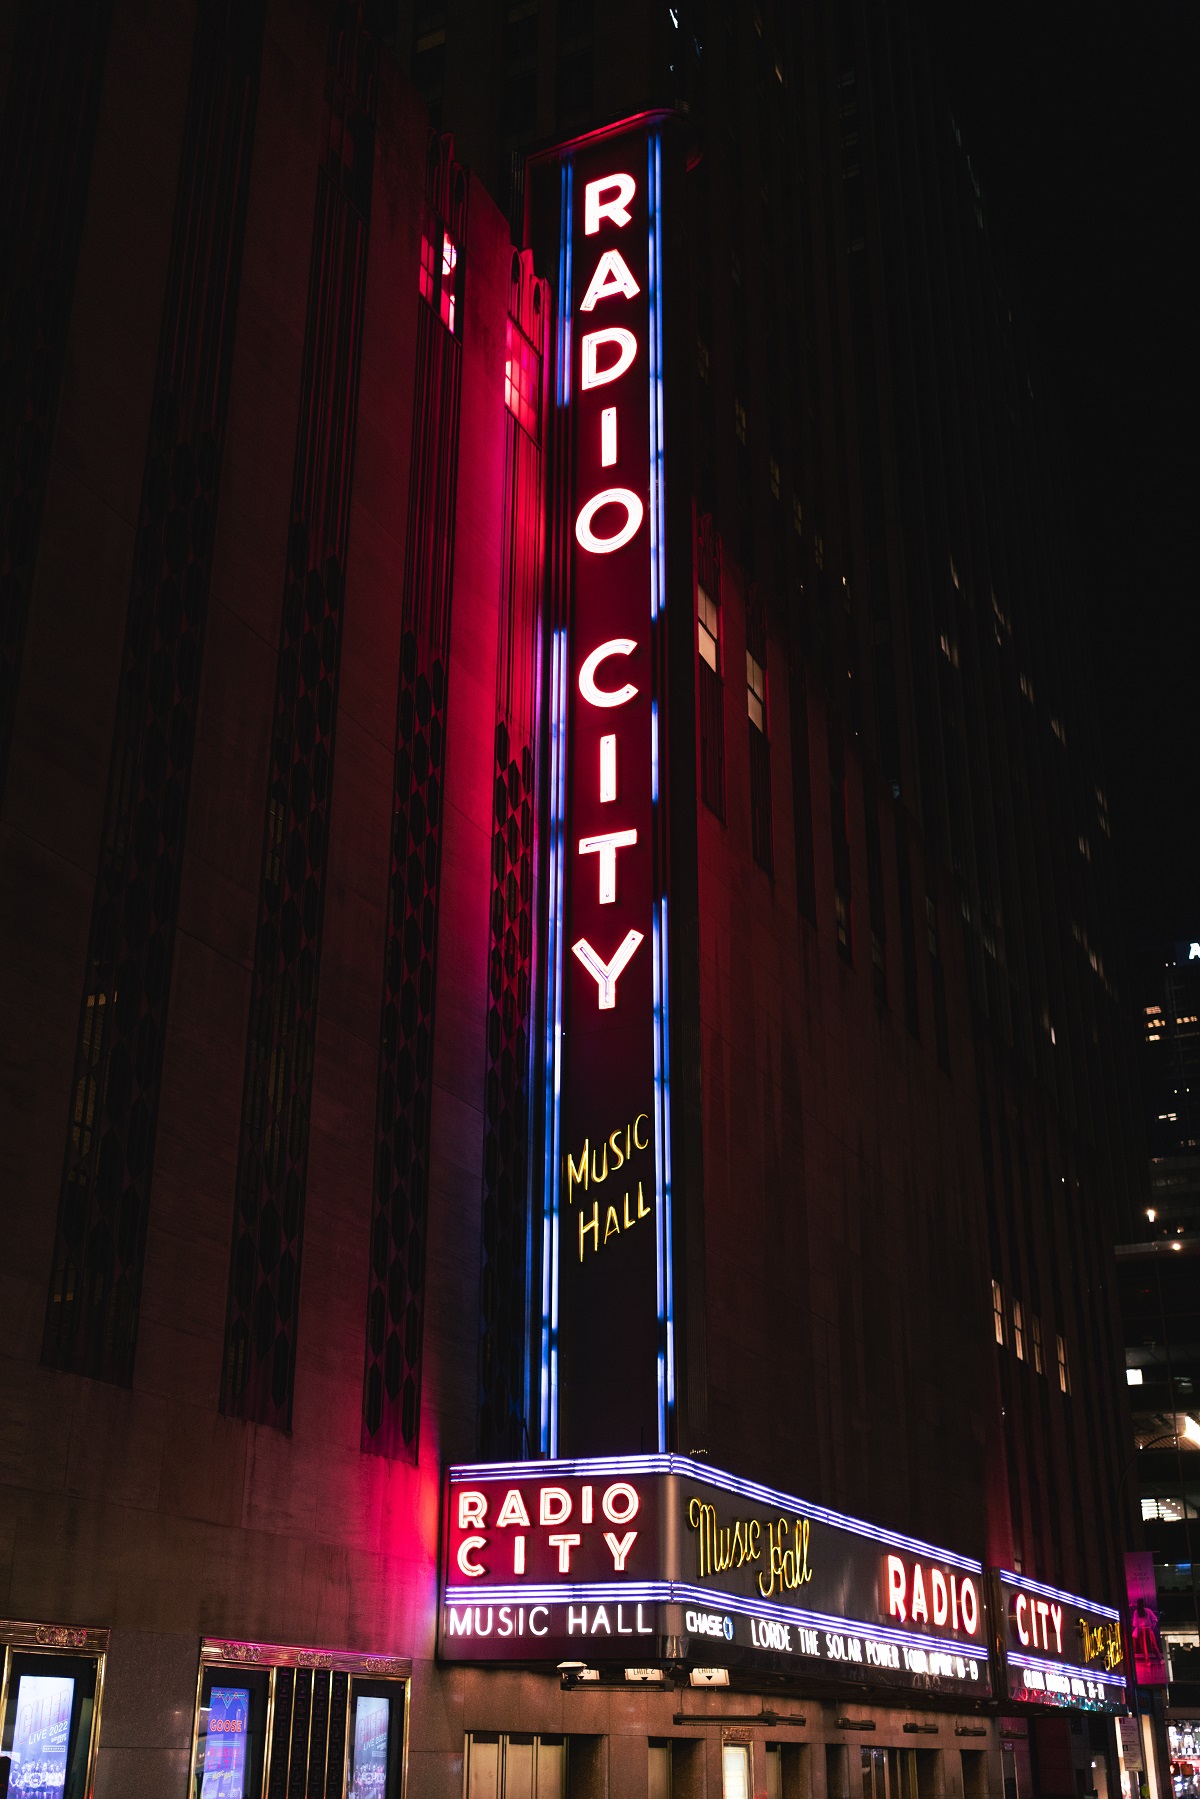 Night scene with neon sign advertising Radio City Music Hall